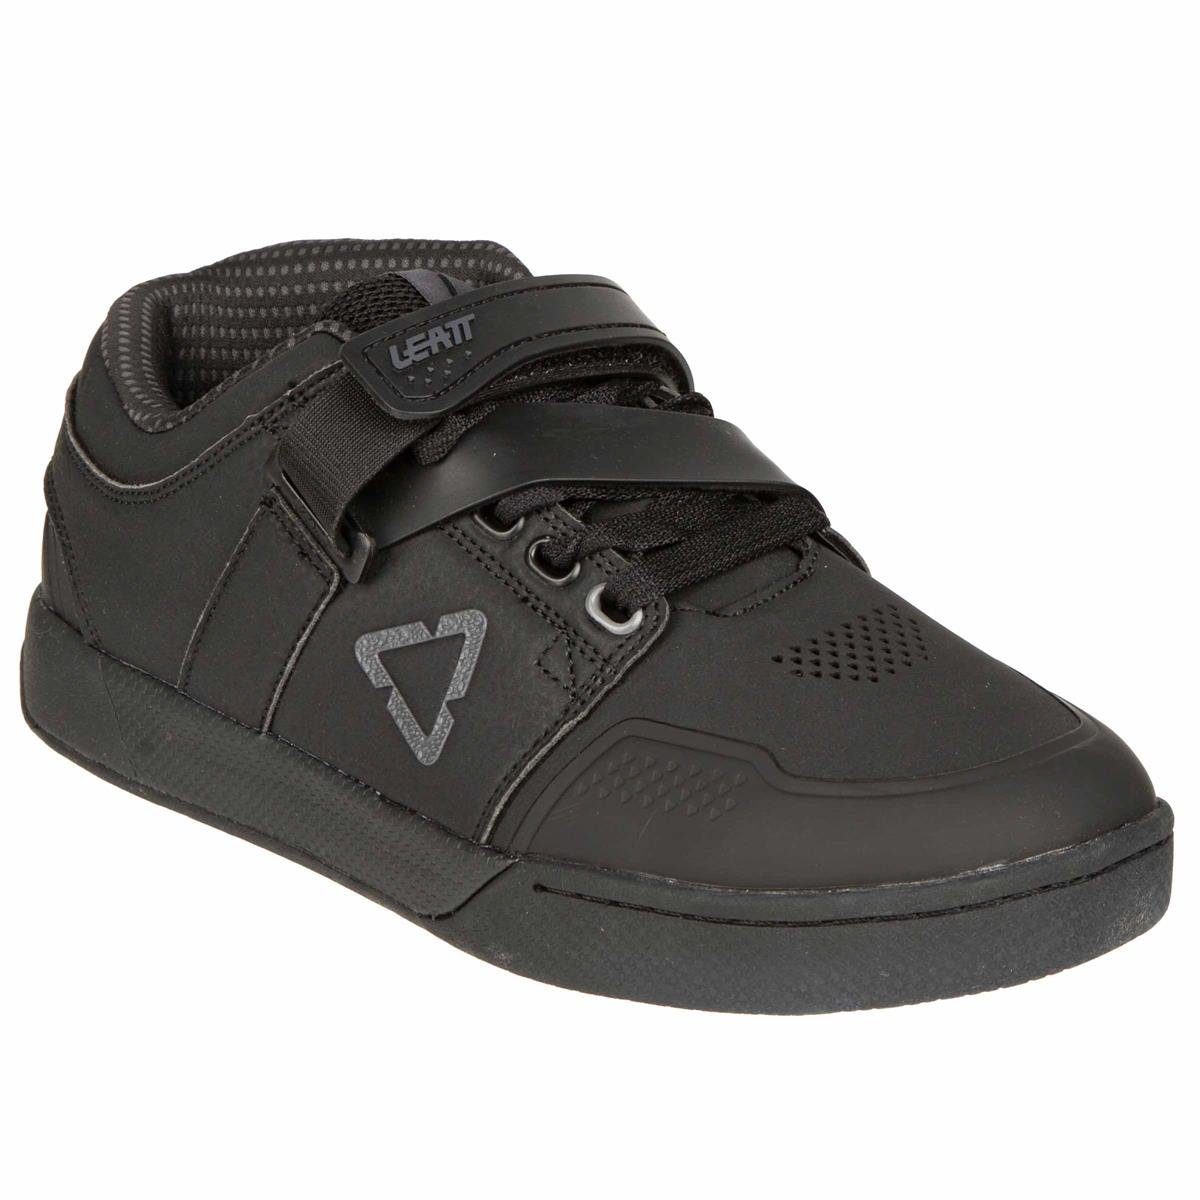 Leatt Chaussures VTT 4.0 Klick Noir